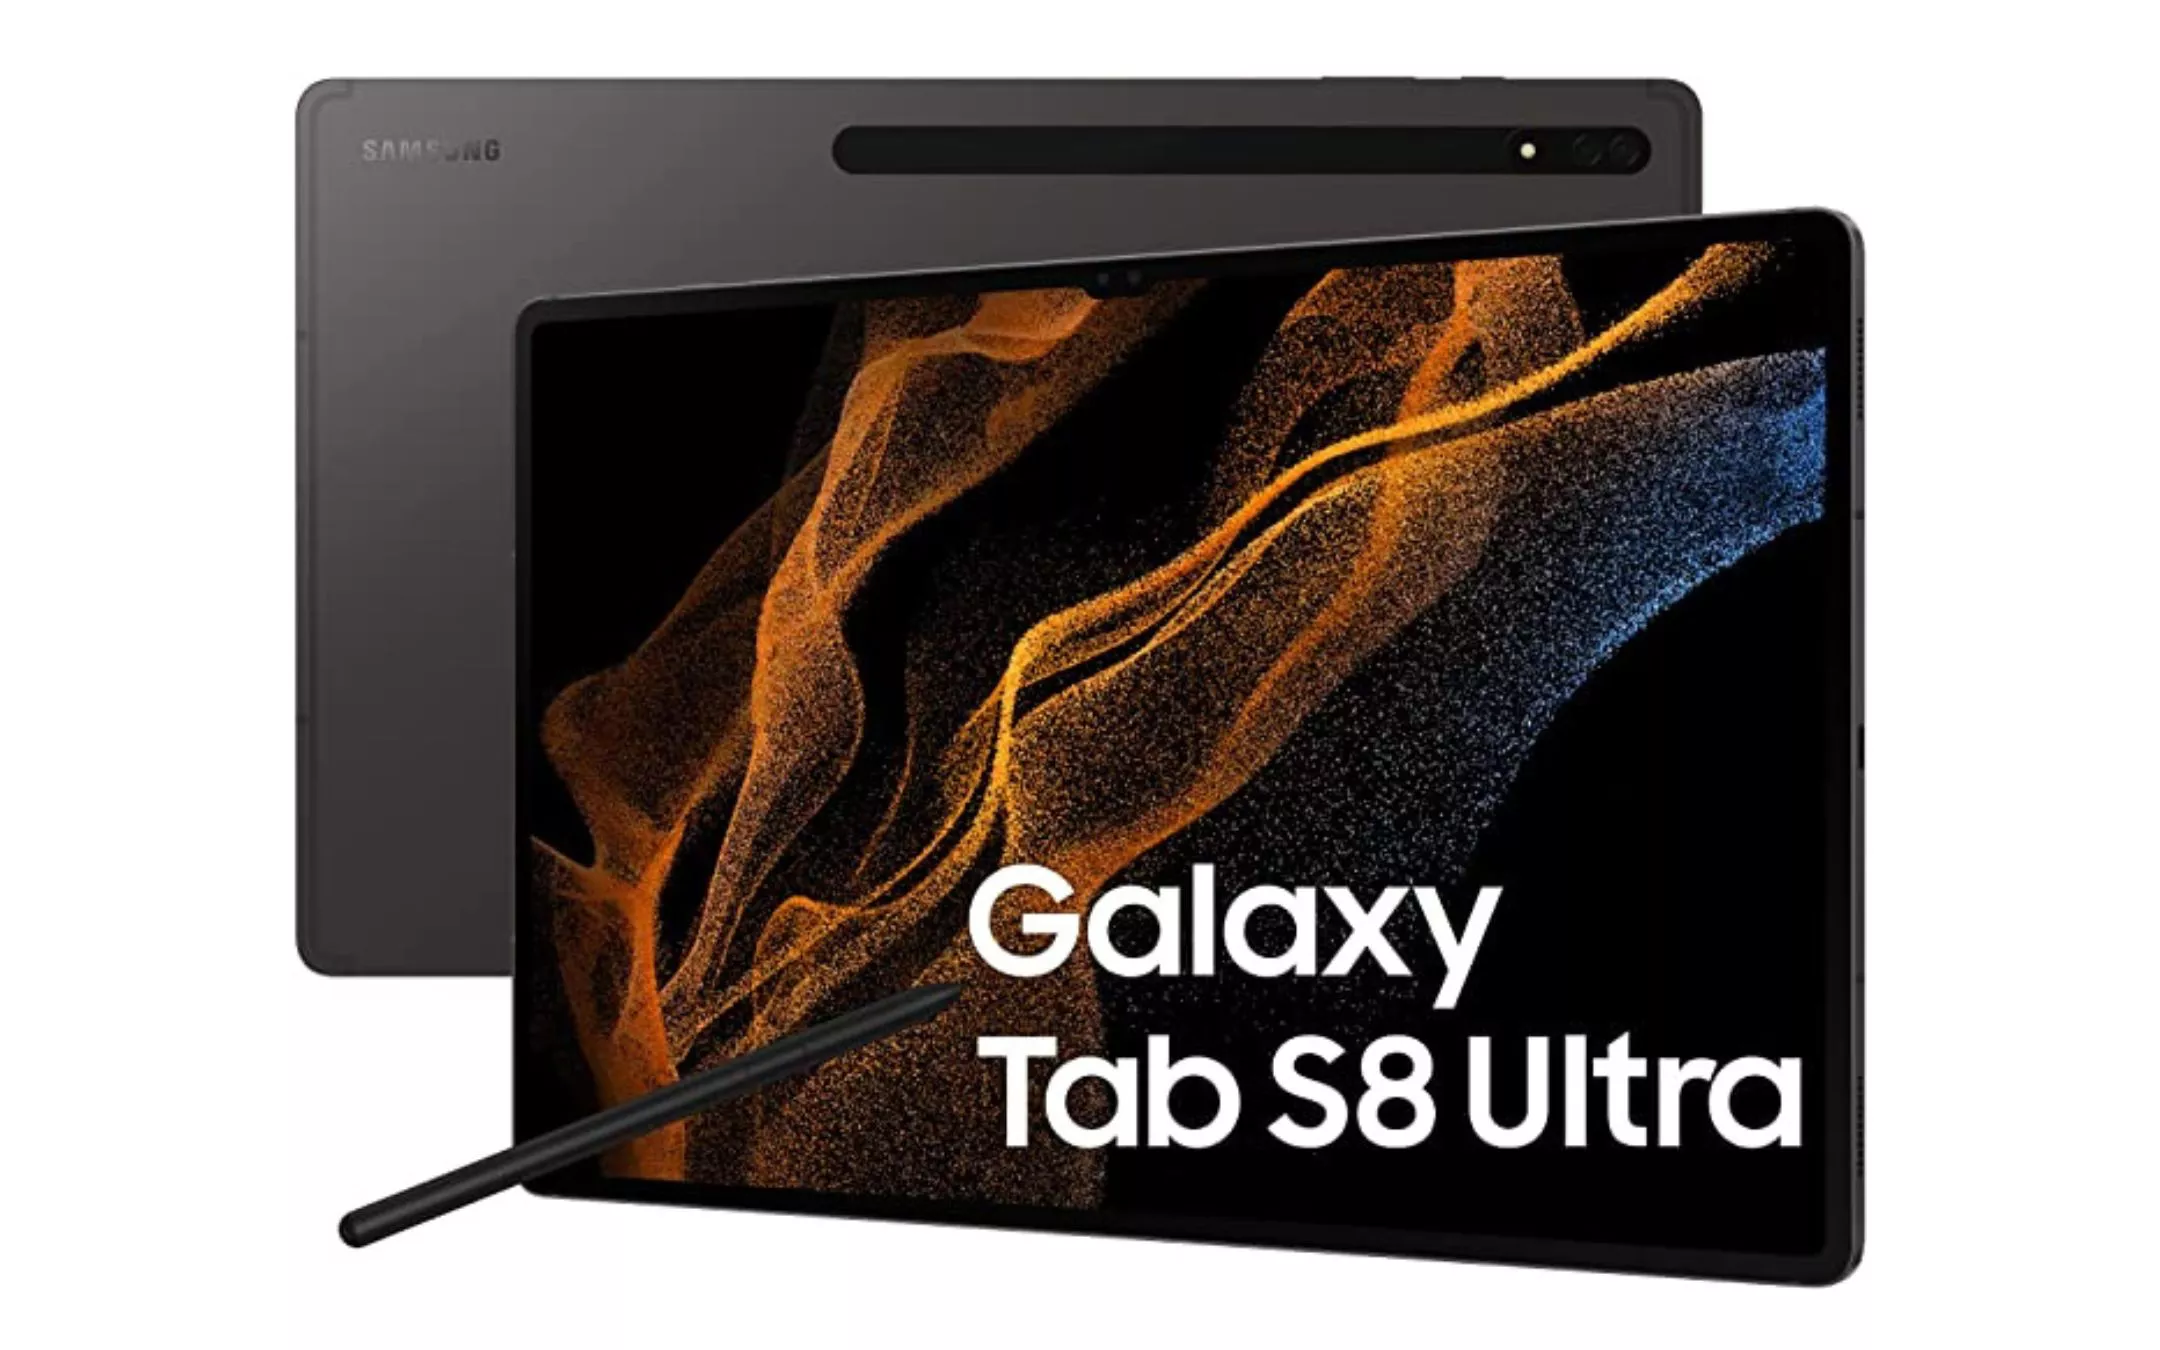 Questo tablet Samsung Galaxy è in offerta al minimo storico su